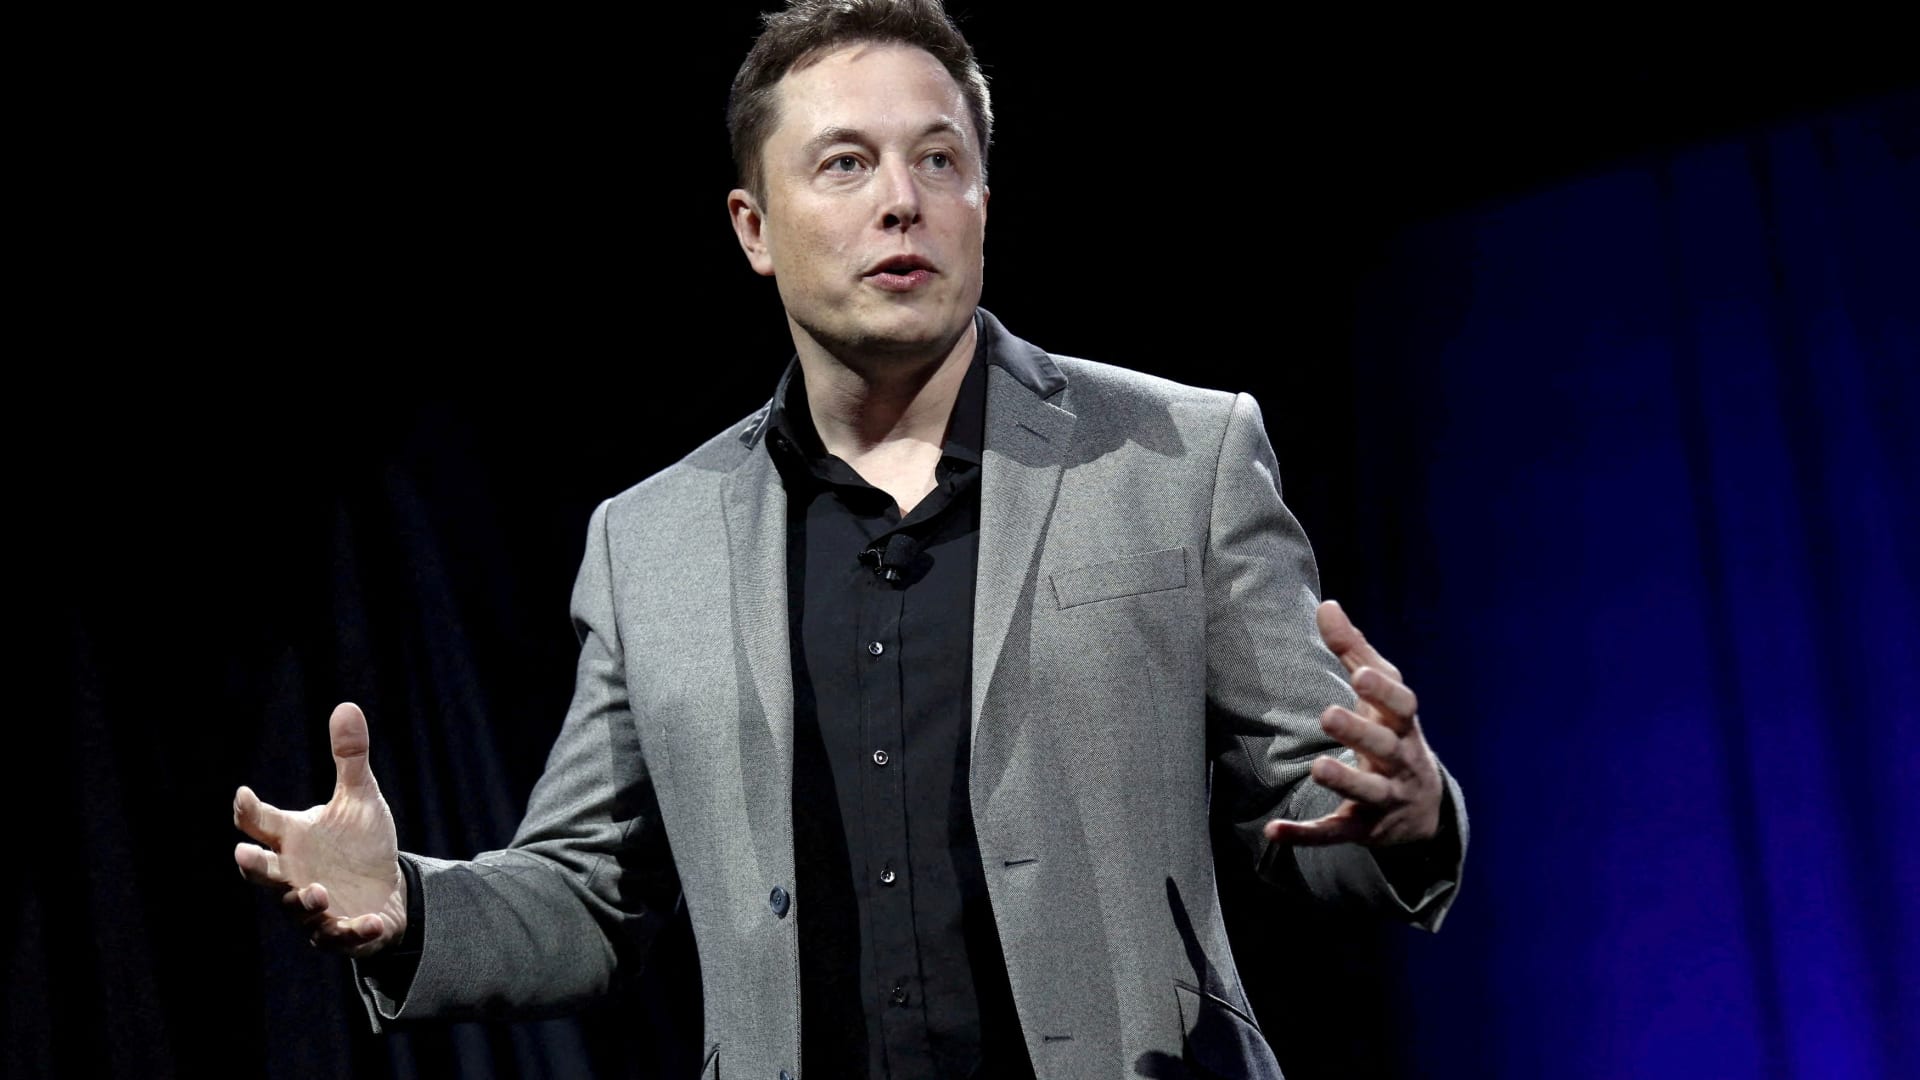 Elon Musk challenges Twitter CEO Parag Agrawal in bot debate